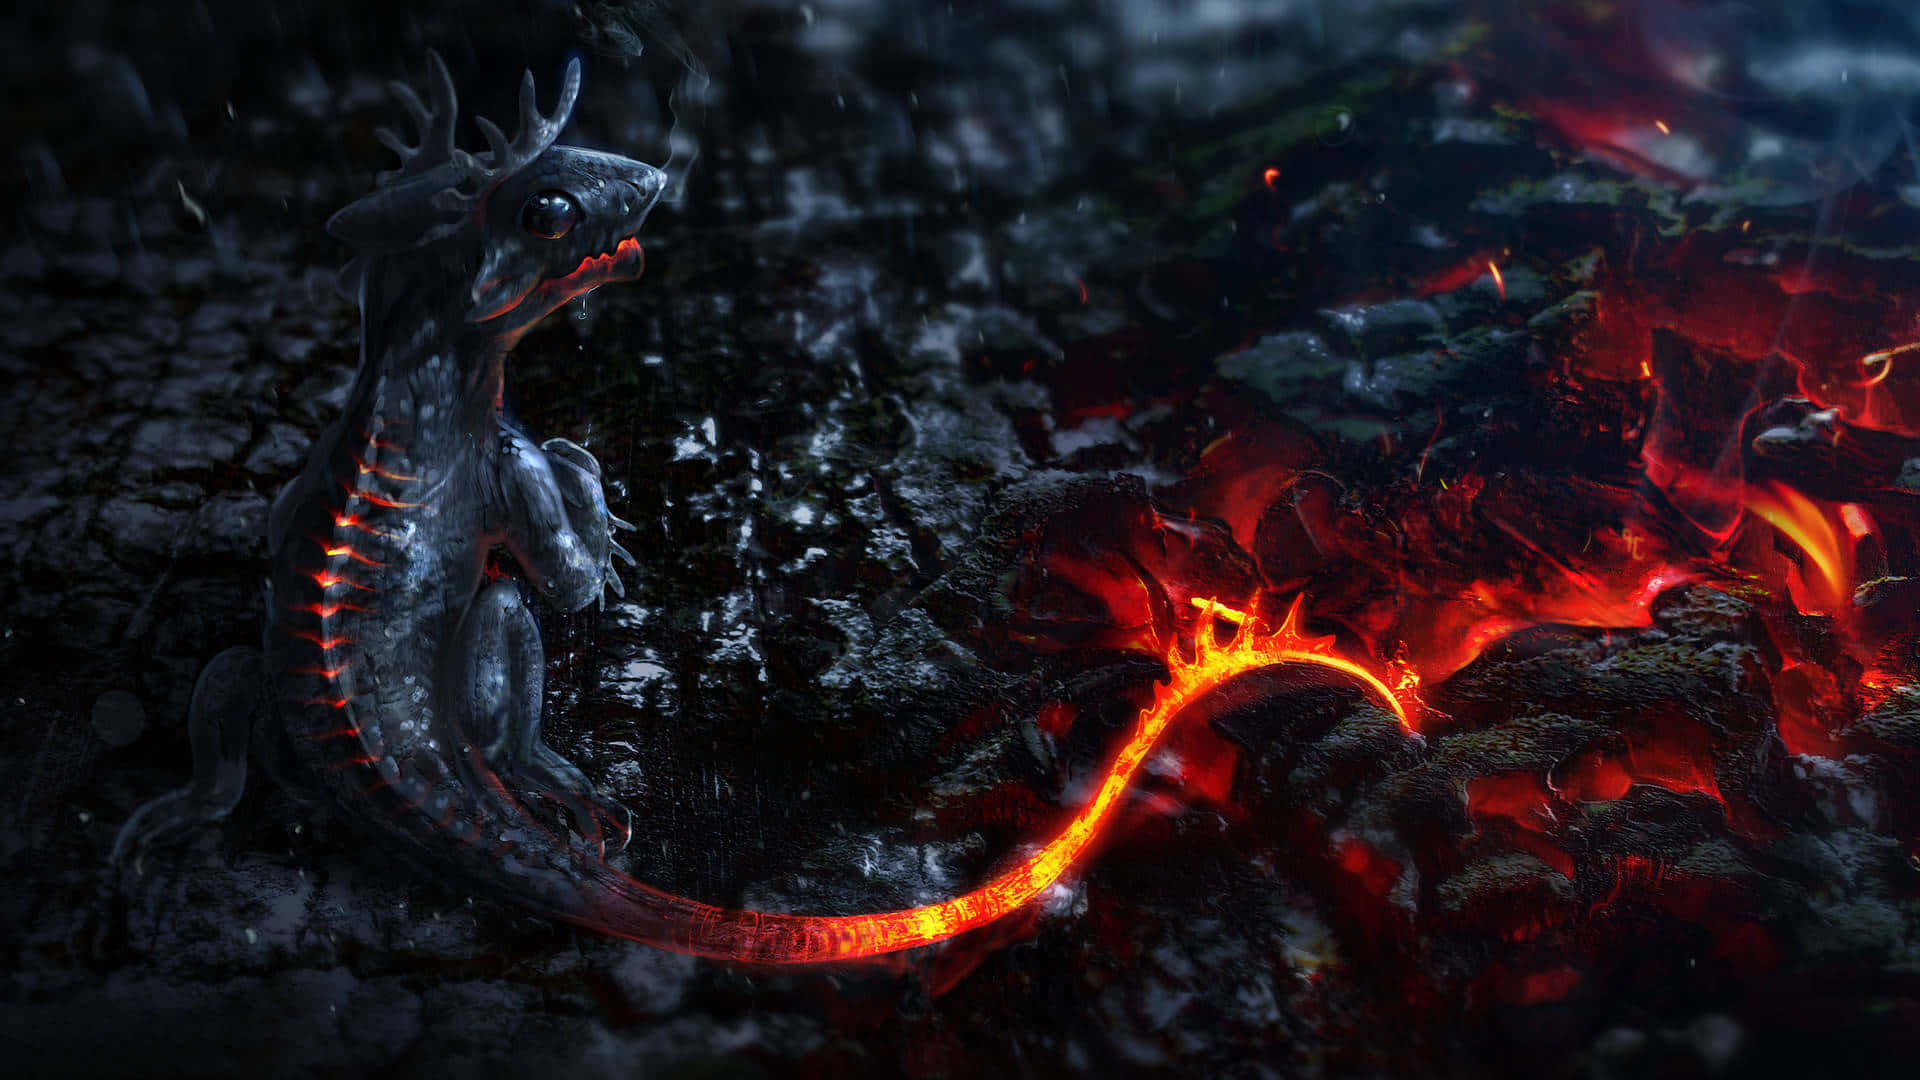 A Powerful Dragon rises through an immense thundering sky Wallpaper